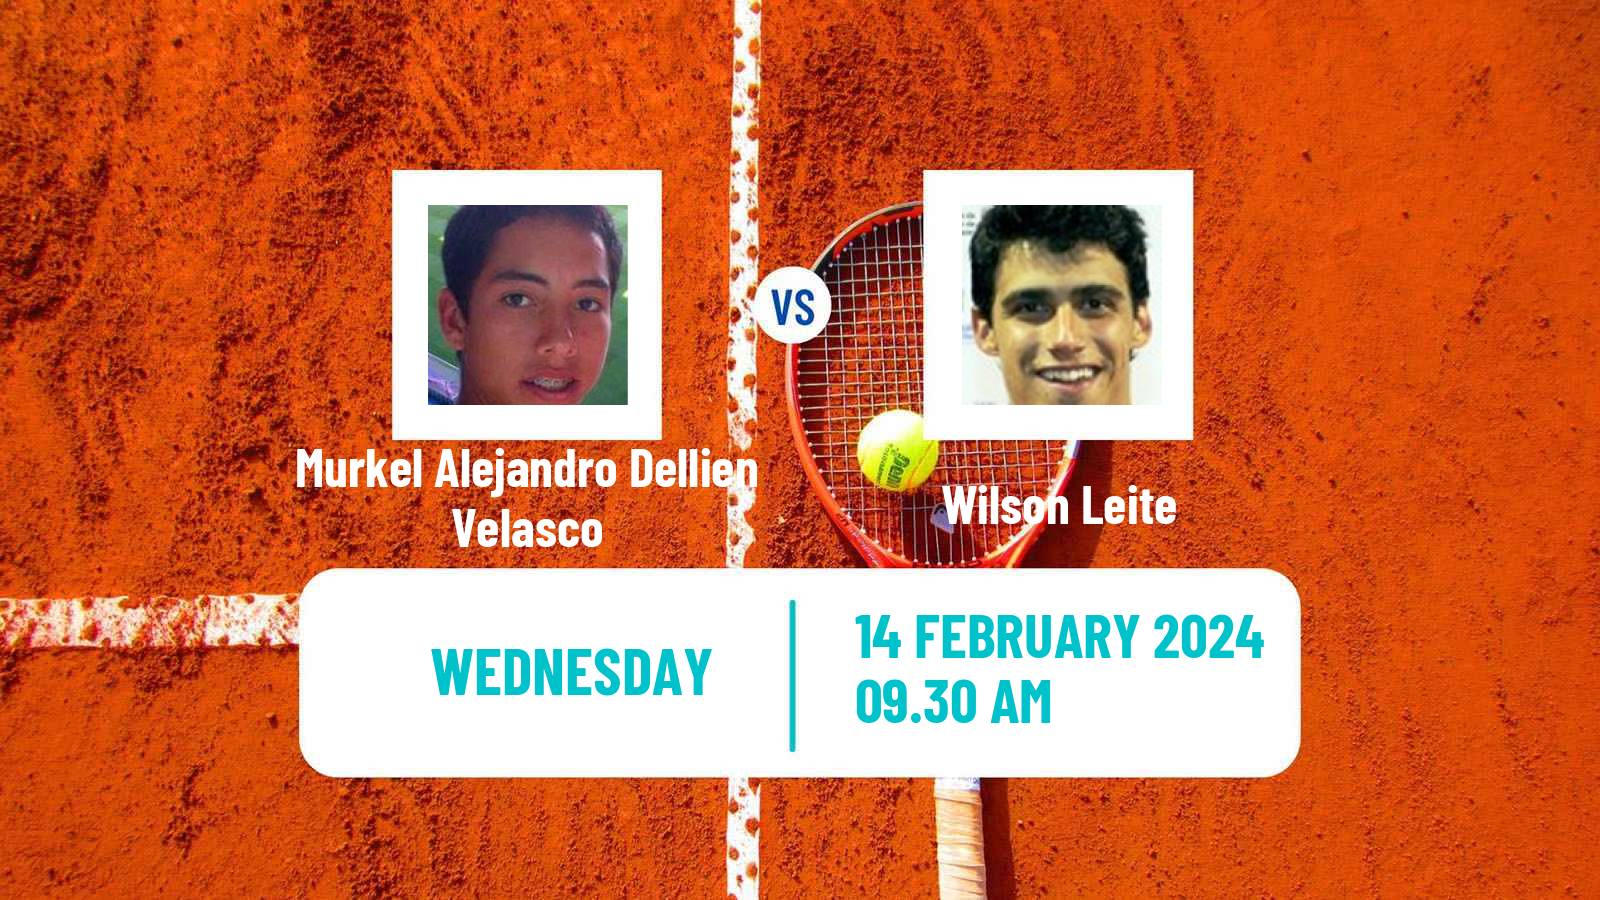 Tennis ITF M25 Punta Del Este 2 Men Murkel Alejandro Dellien Velasco - Wilson Leite